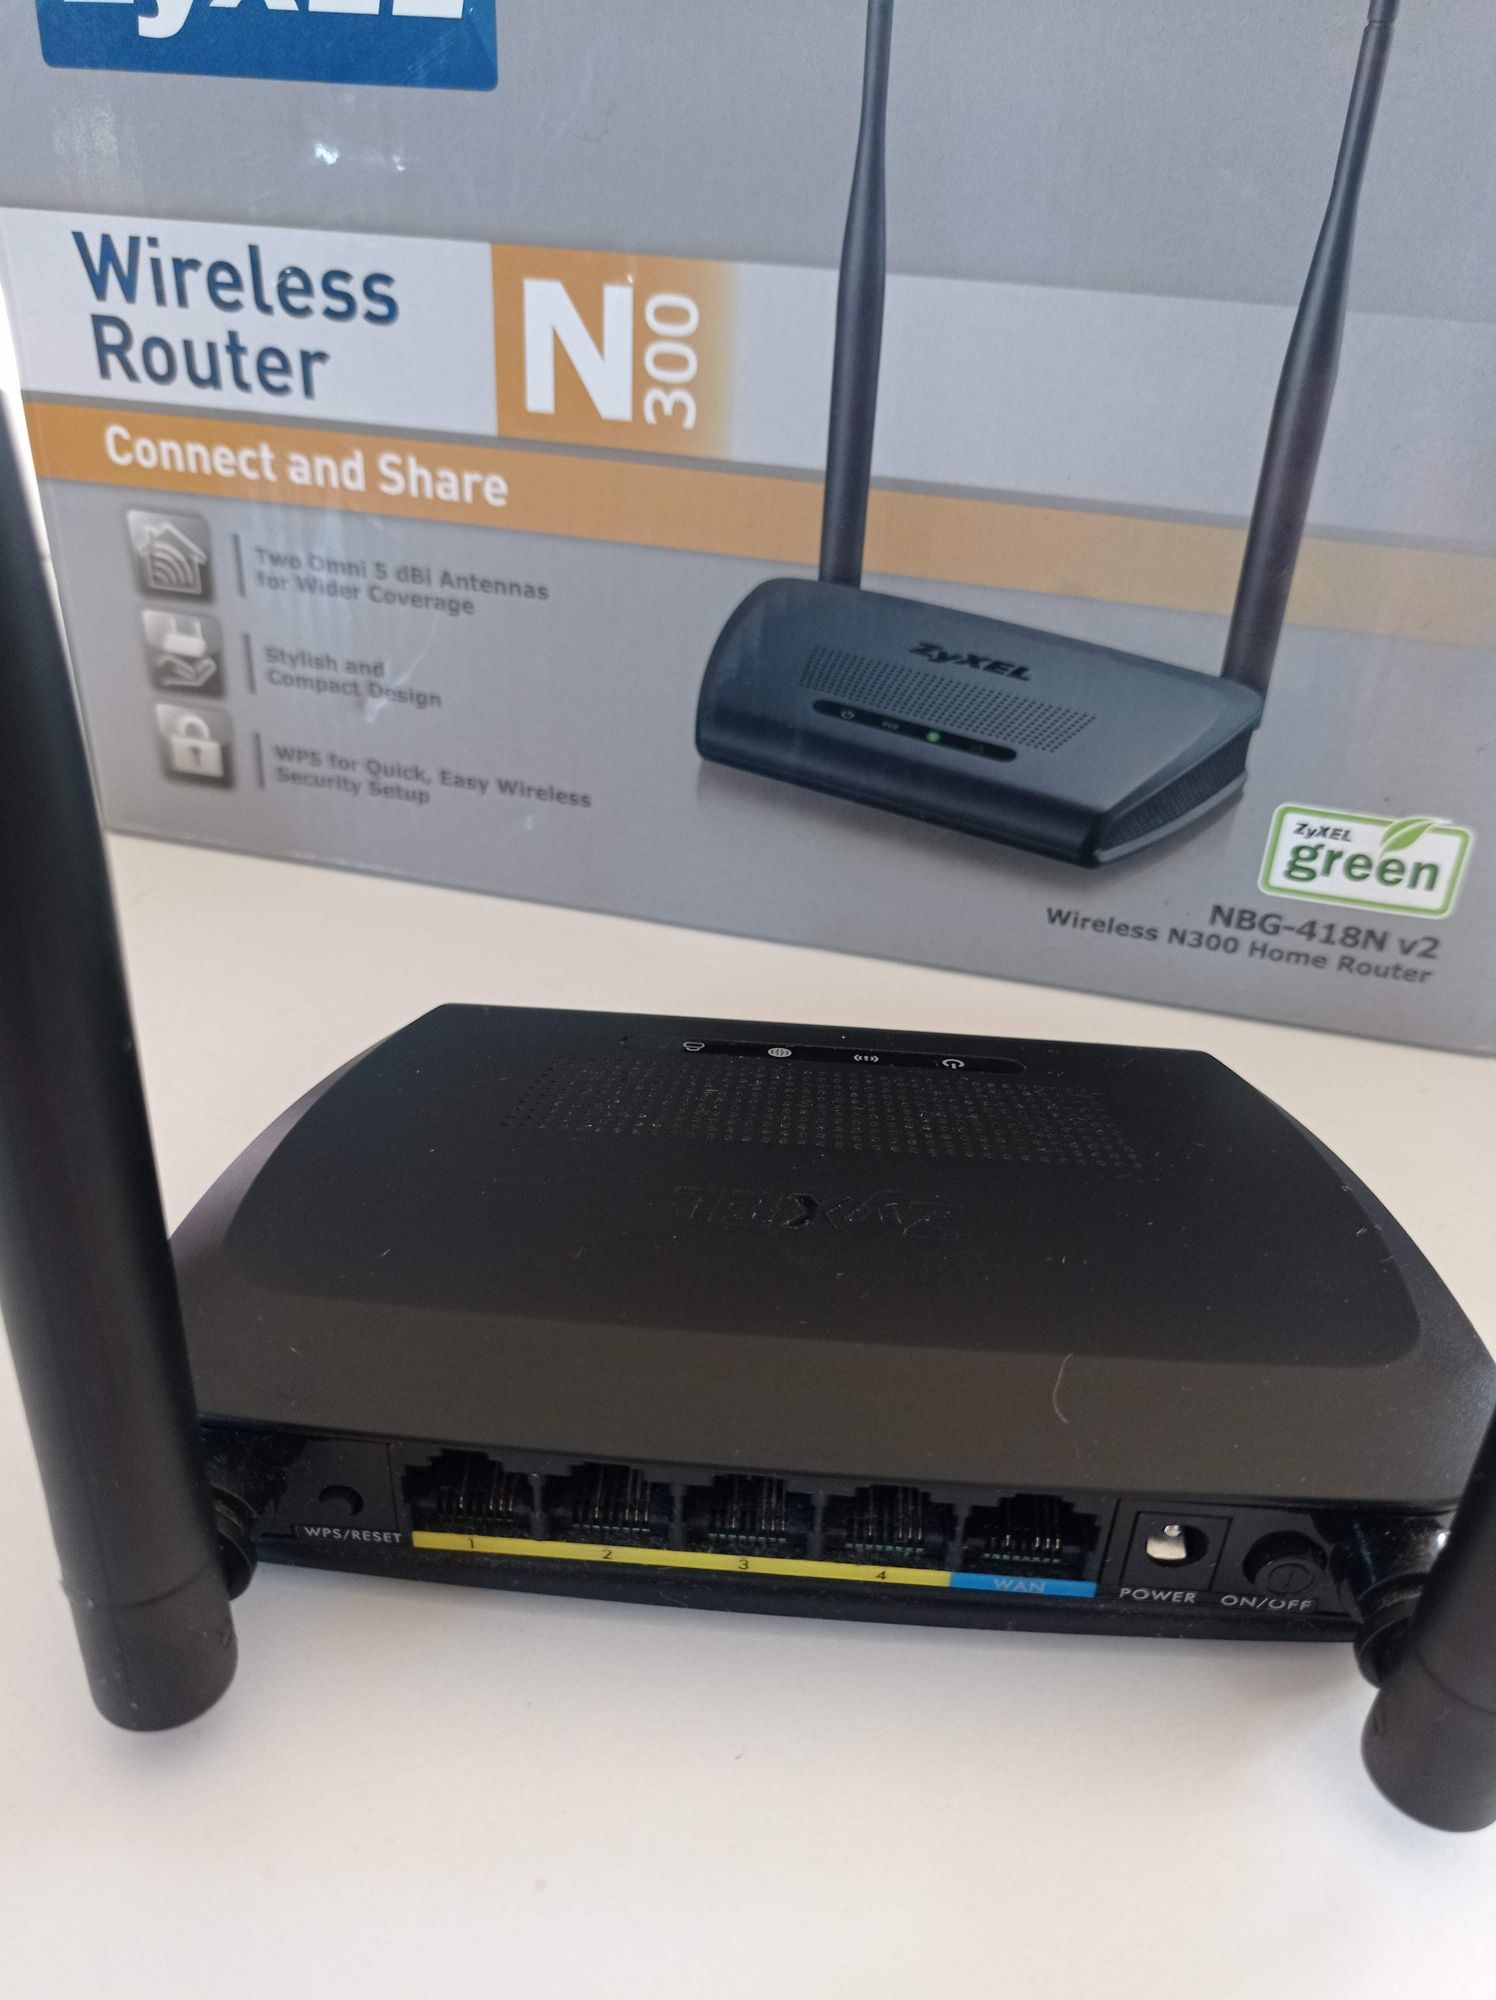 Router wifi n300 nbg-418n v2 100% sprawny